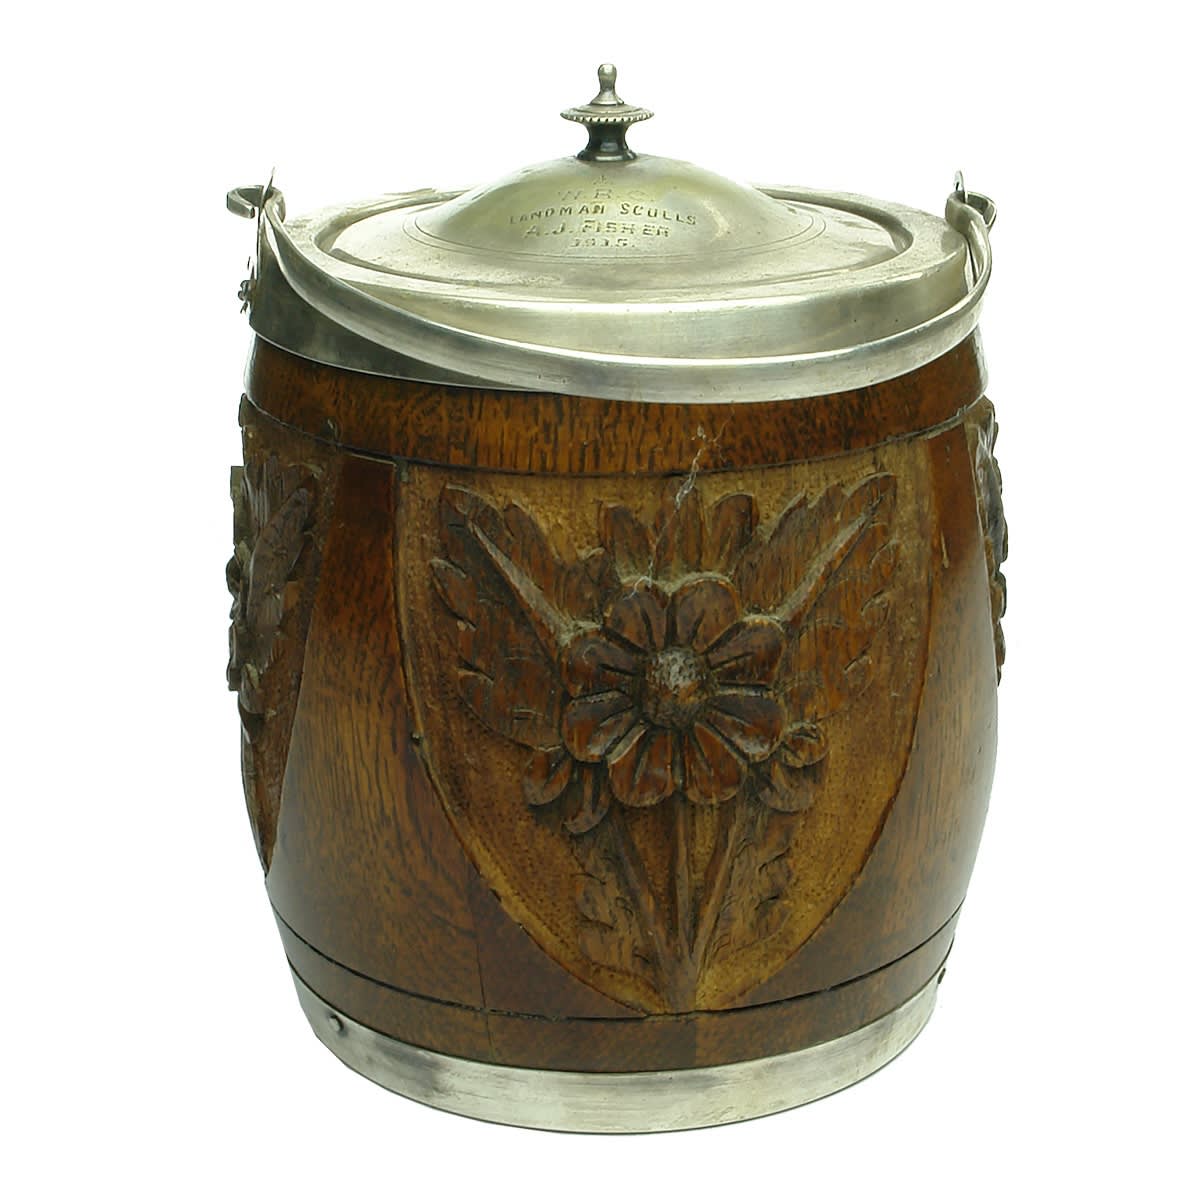 Biscuit Barrel. Carved wood, porcelain inside, plated metal. WRC Landman Sculls A. J. Fisher 1915. (Warrnambool Rowing Club, Victoria)